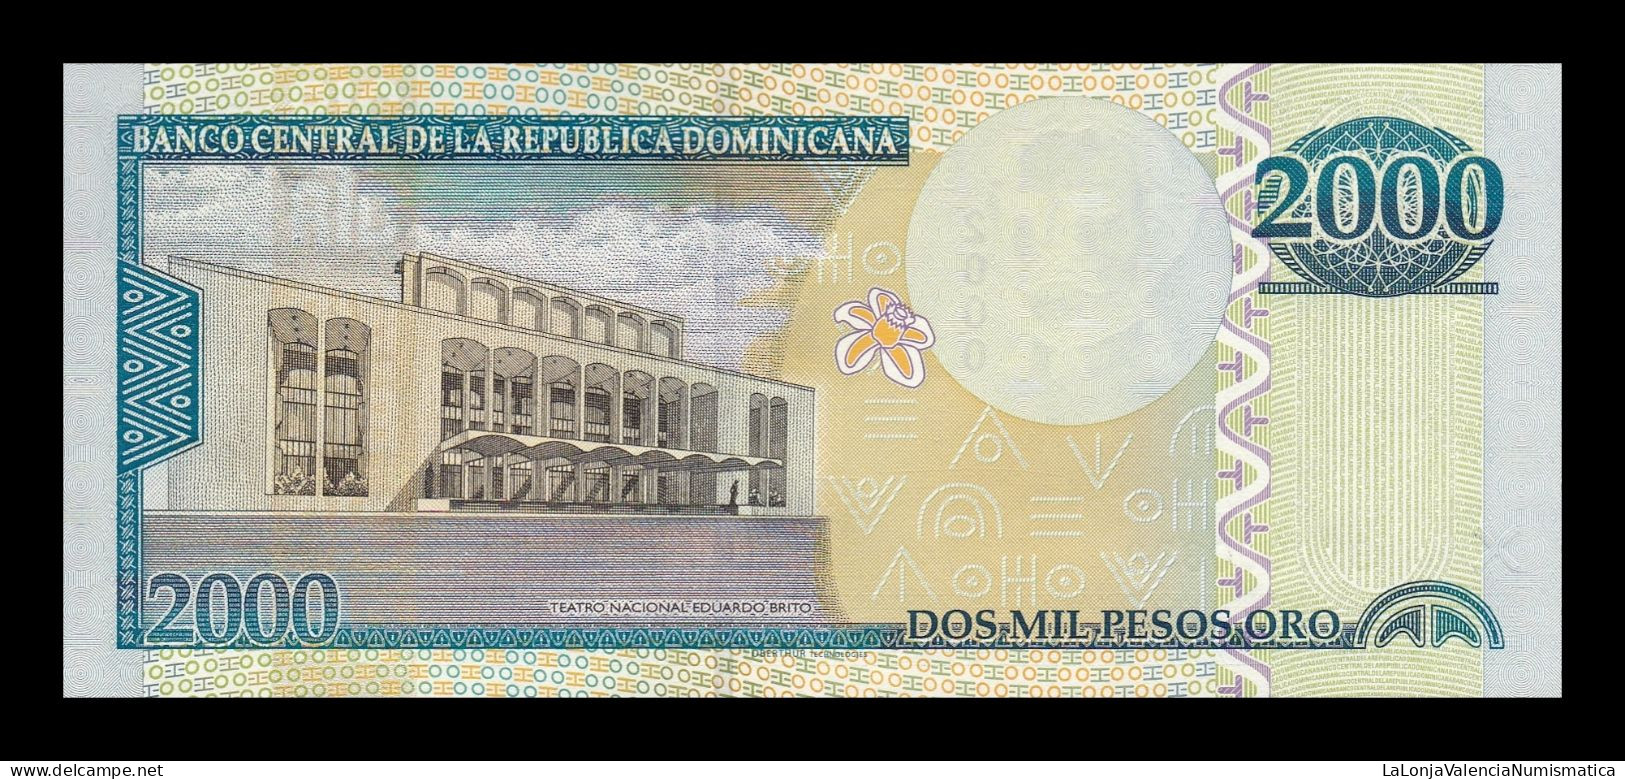 República Dominicana 2000 Pesos Oro 2010 Pick 181c Low Serial 832 Sc Unc - Dominicana